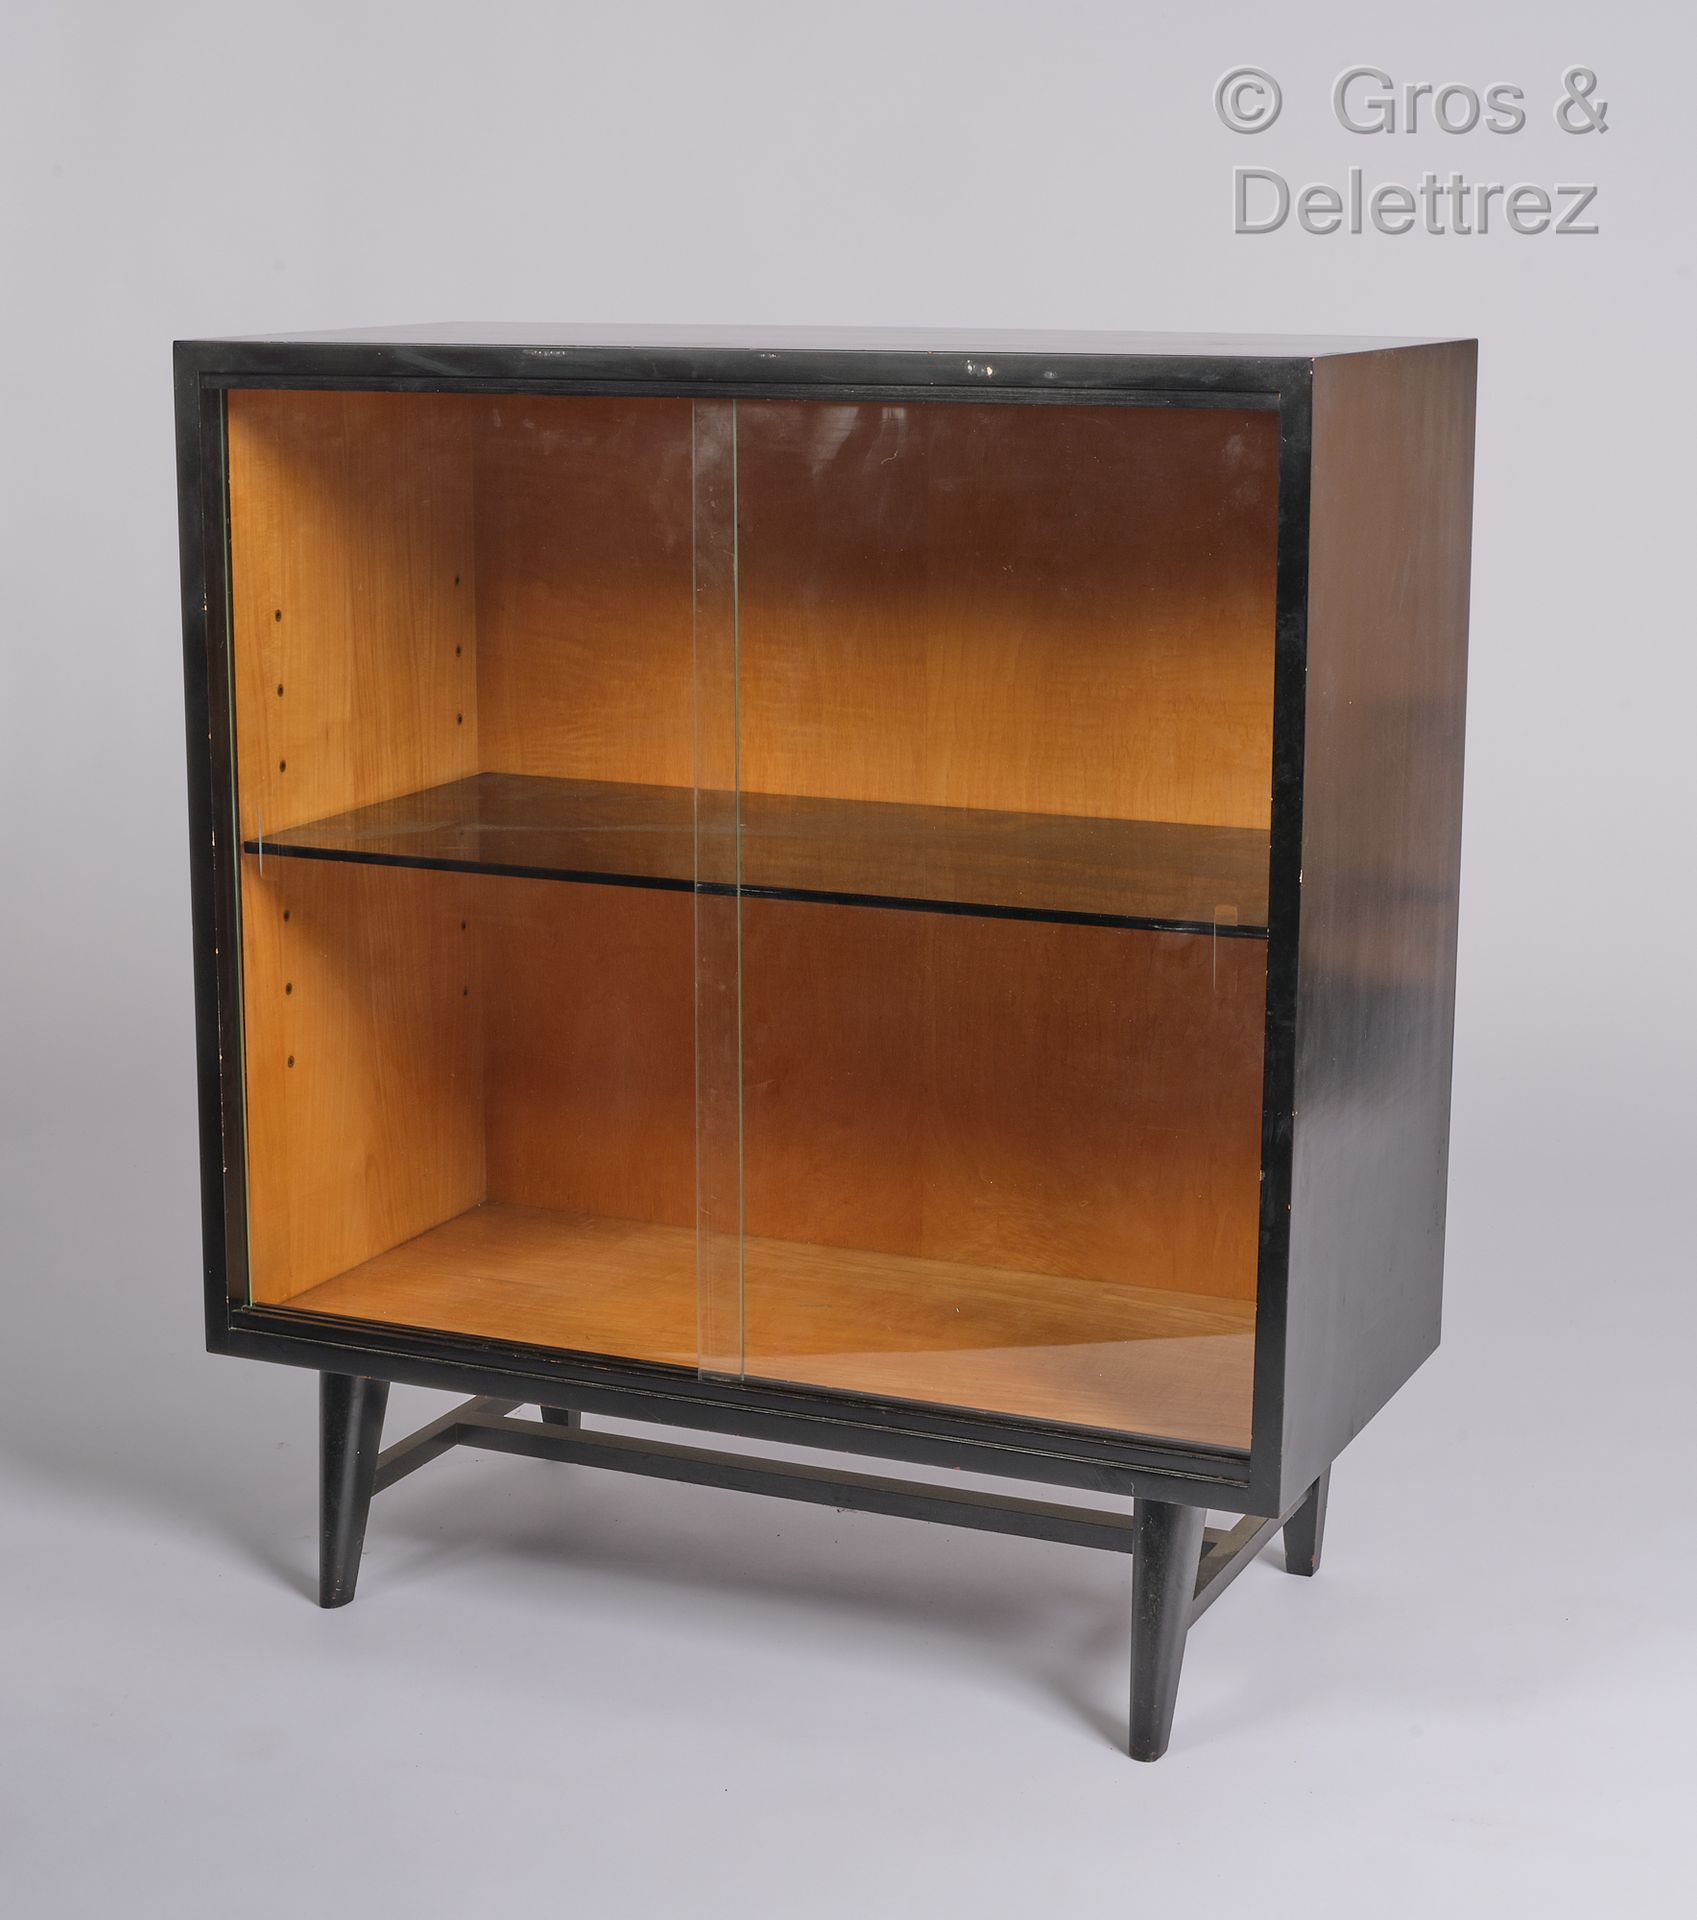 Null 莫里斯-弗拉歇 (1872-1964)

黑漆木质展示柜开有两扇玻璃推拉门

约1950年

高：100厘米，宽：89厘米，深：43厘米

(使用后的&hellip;